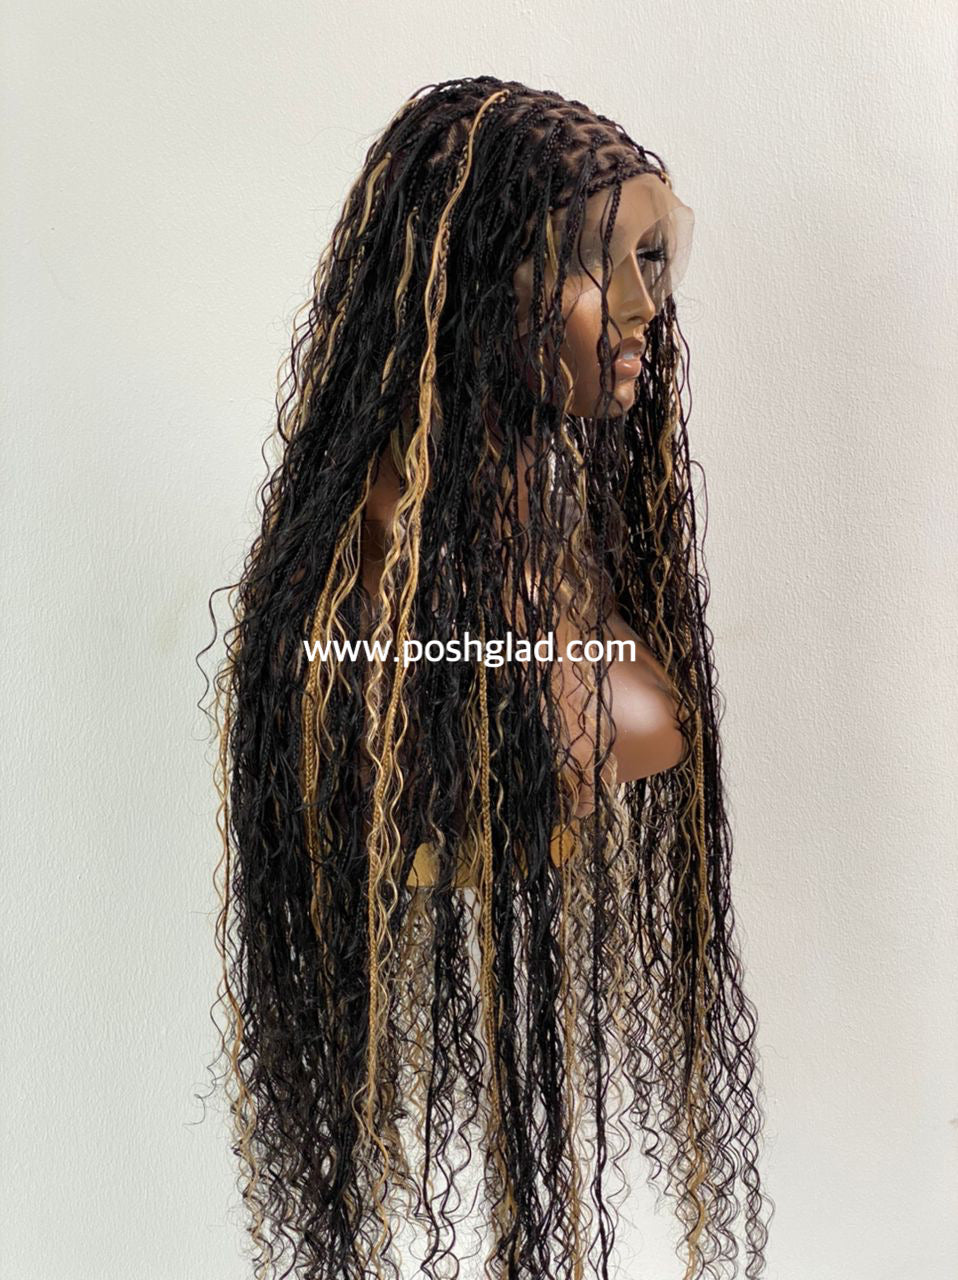 Bohemian Knotless Wig "HD Full Lace" (100% Human Hair) Color 1B/27 - TARA Poshglad Braided Wigs Bohemian Knotless Braid Wig